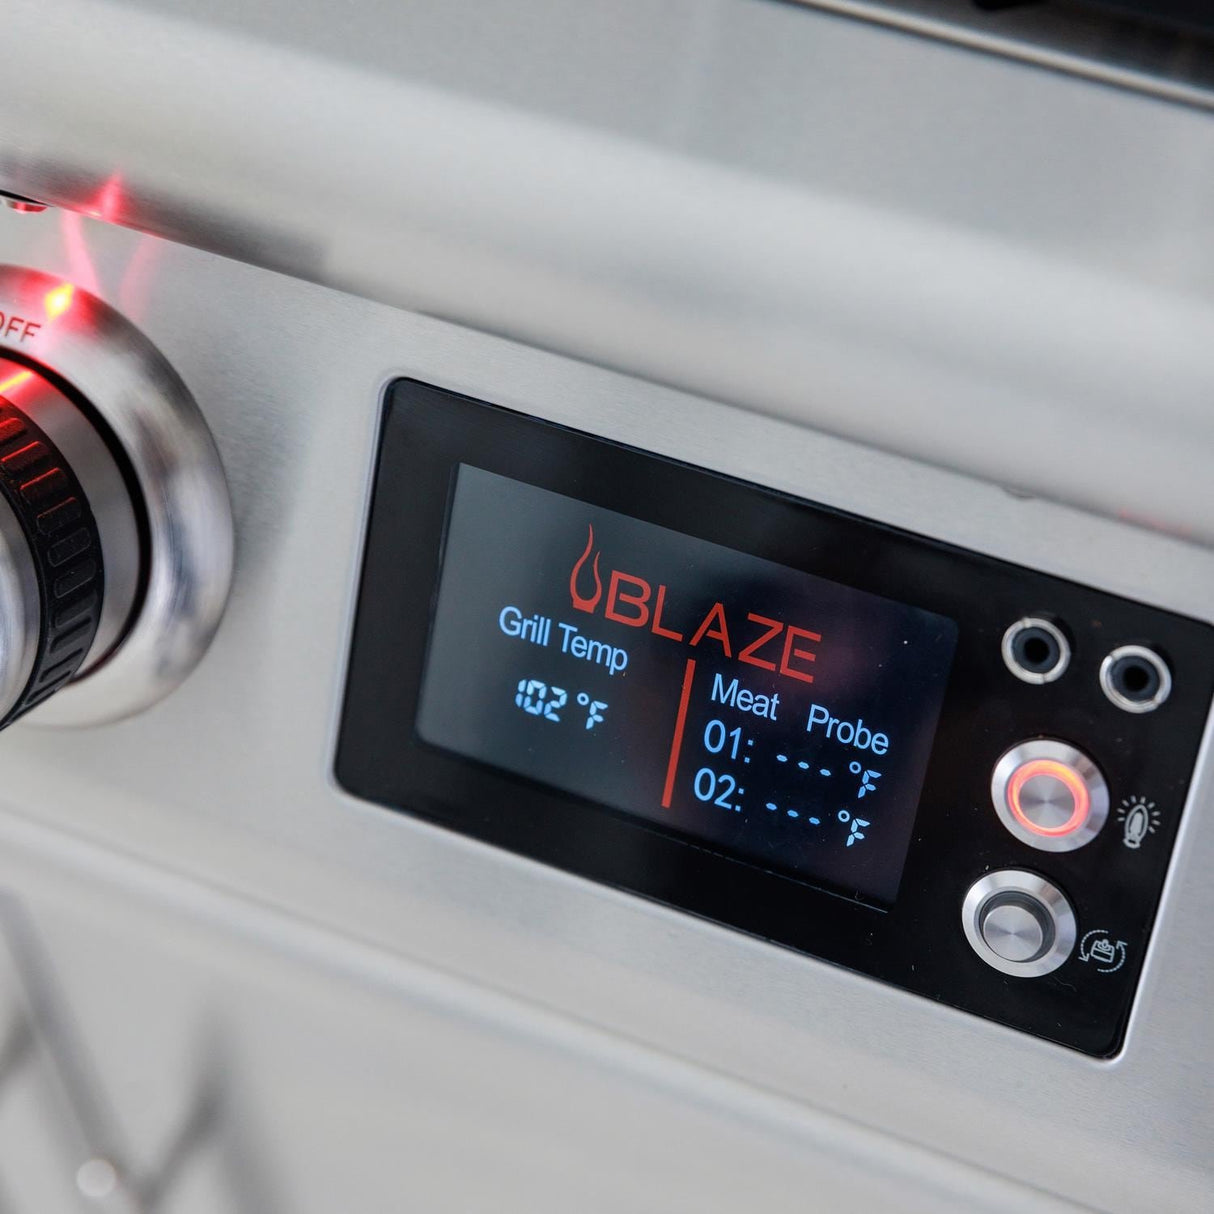 Blaze 26-Inch Freestanding Gas Outdoor Pizza Oven W/ Rotisserie & Cart - BLZ-26-PZOVN